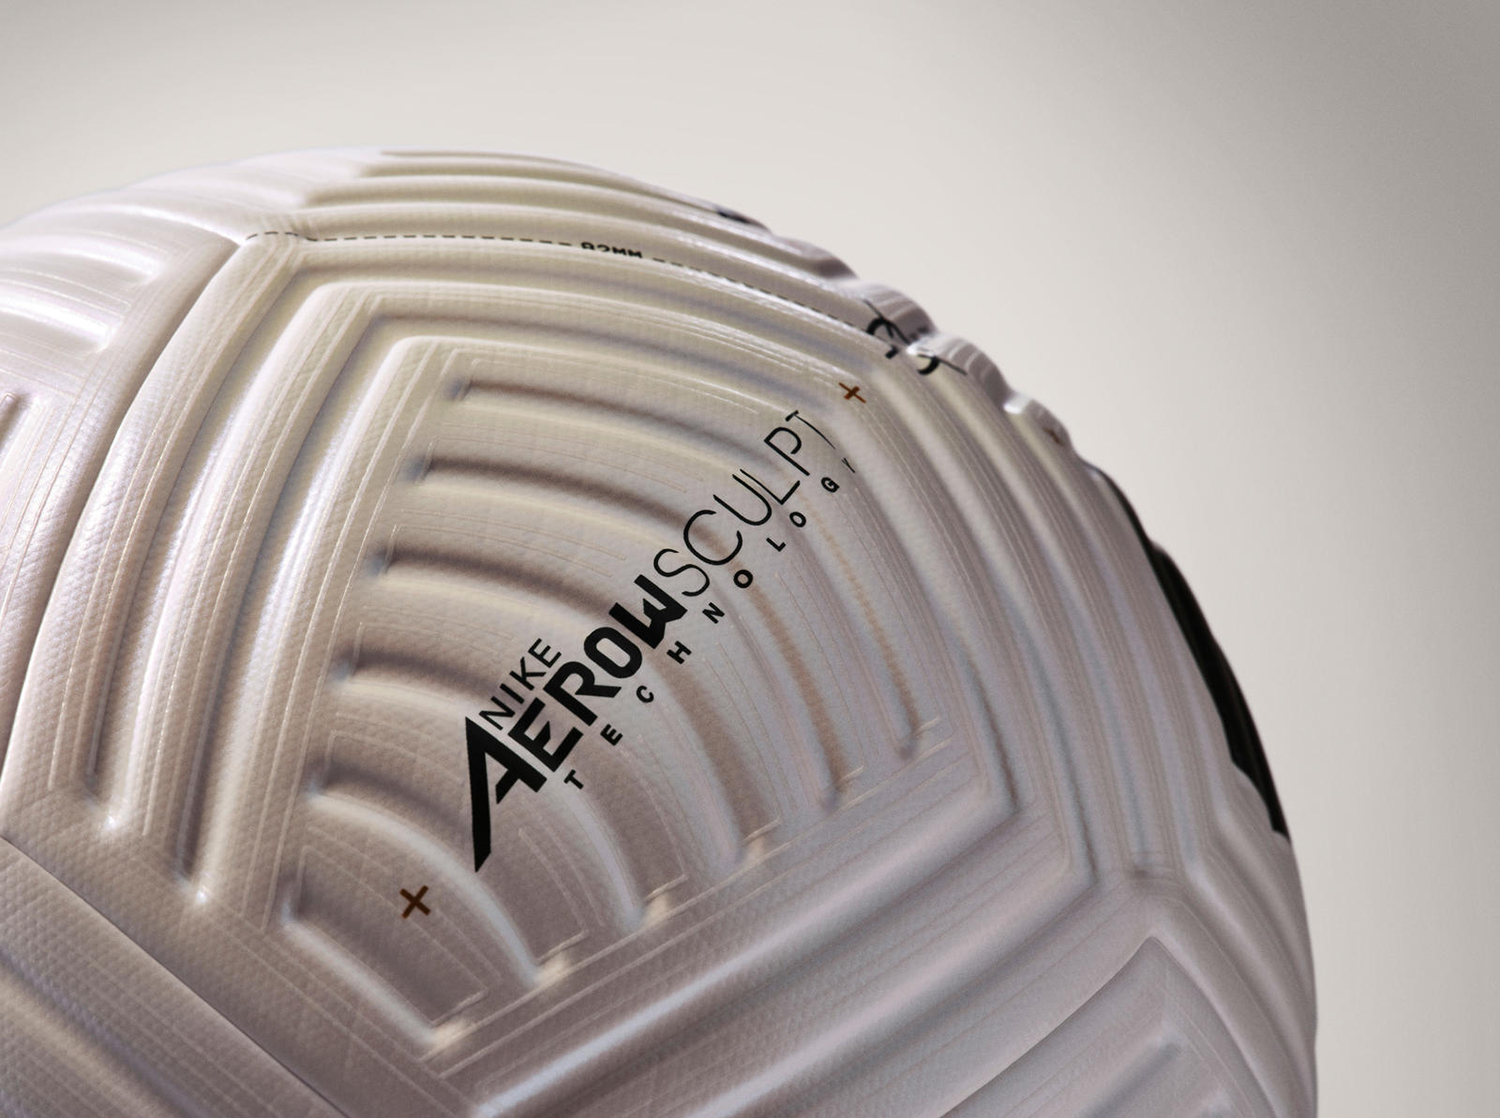 Nike S New Flight Ball Is A Revolution In Football Aerodynamics